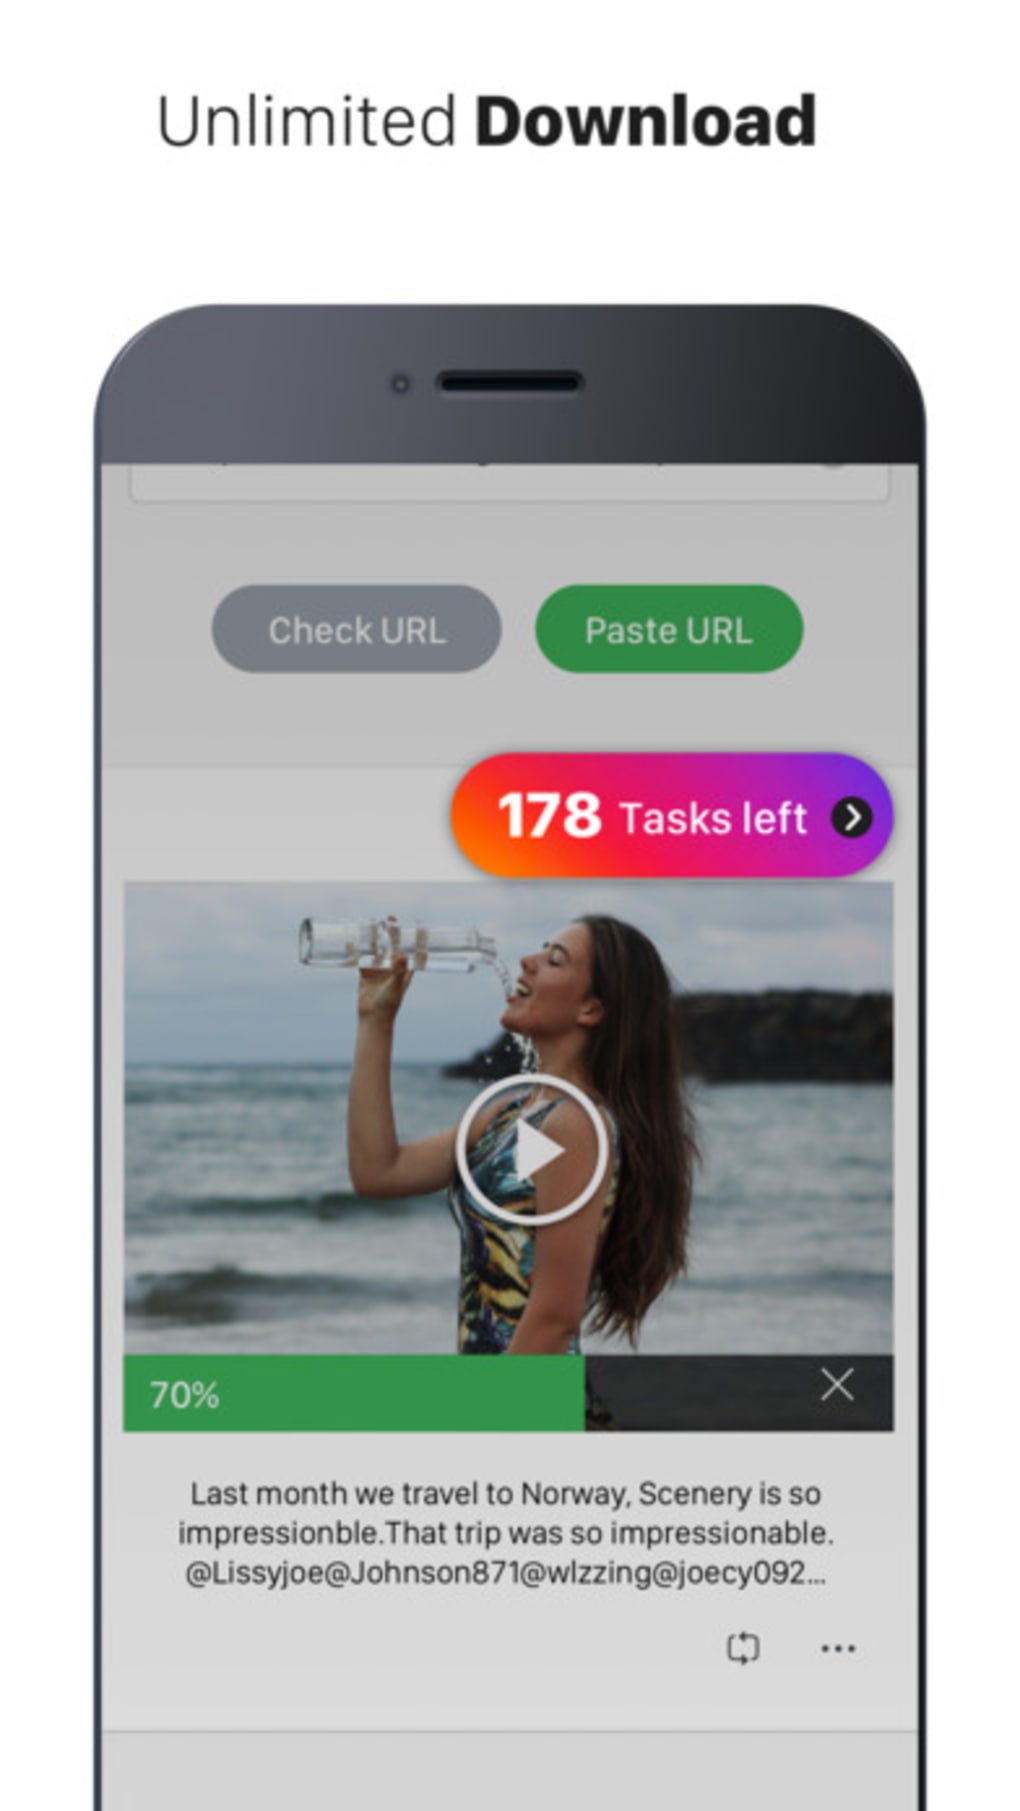 best instagram video downloader for iphone